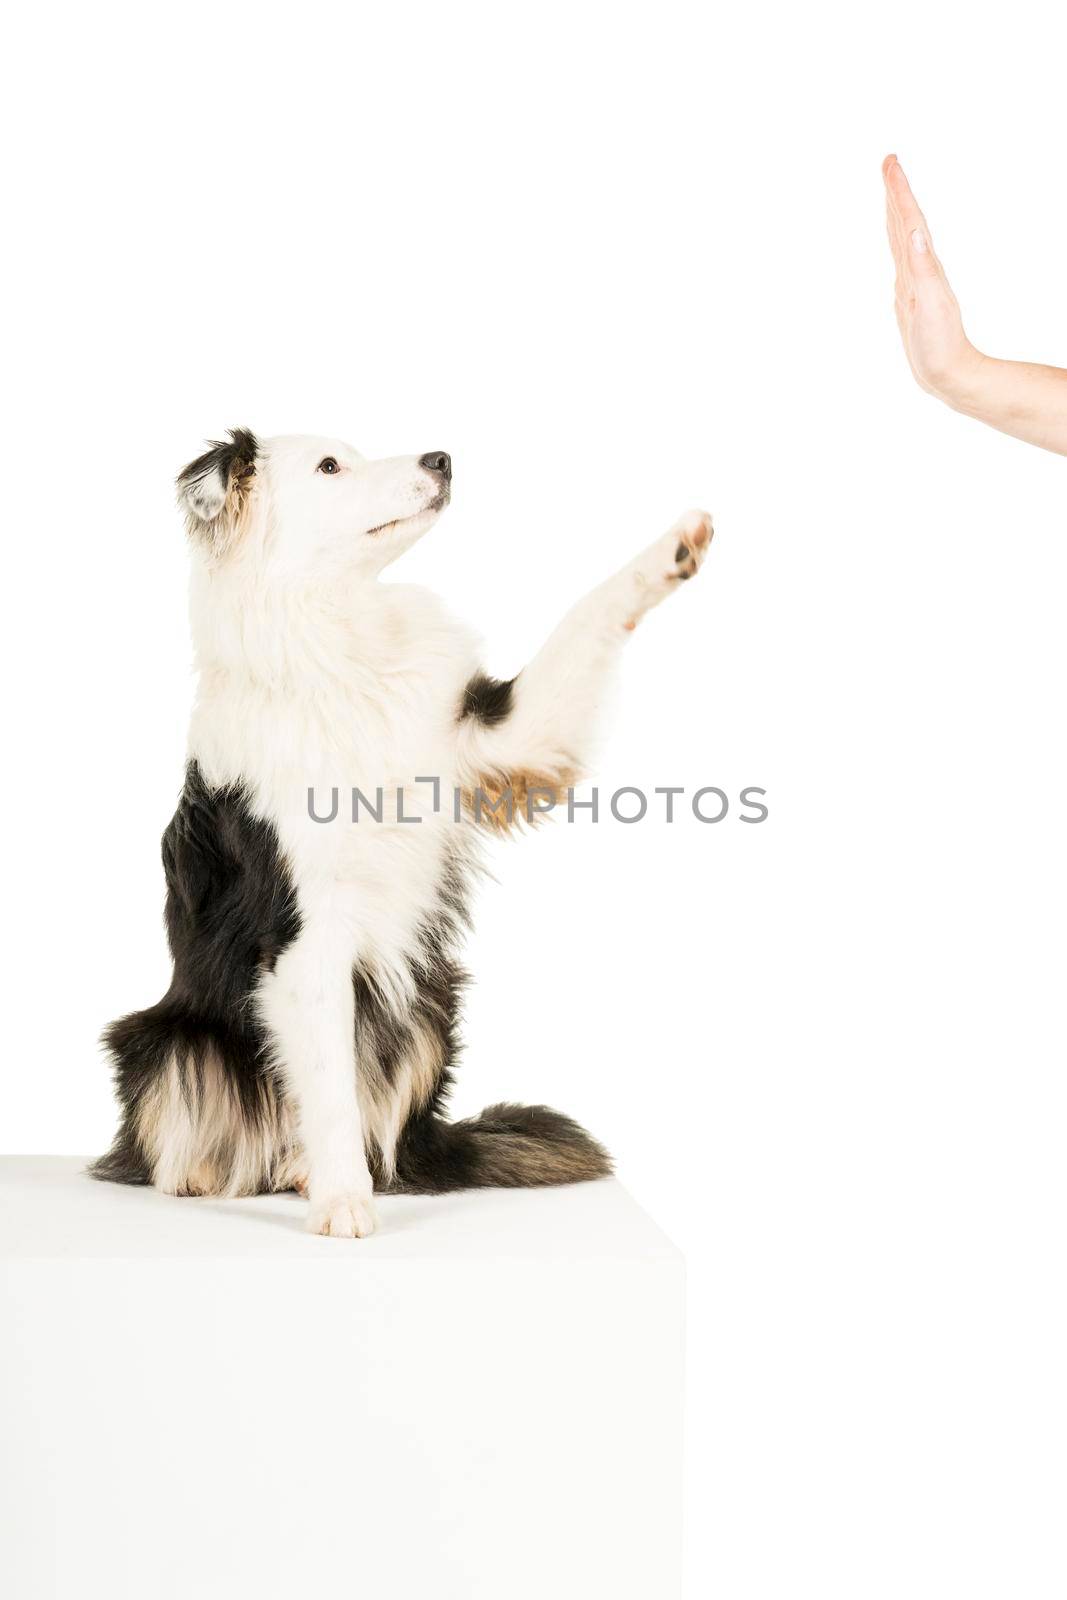 Australian Shepherd dog in white background giving a high five by LeoniekvanderVliet